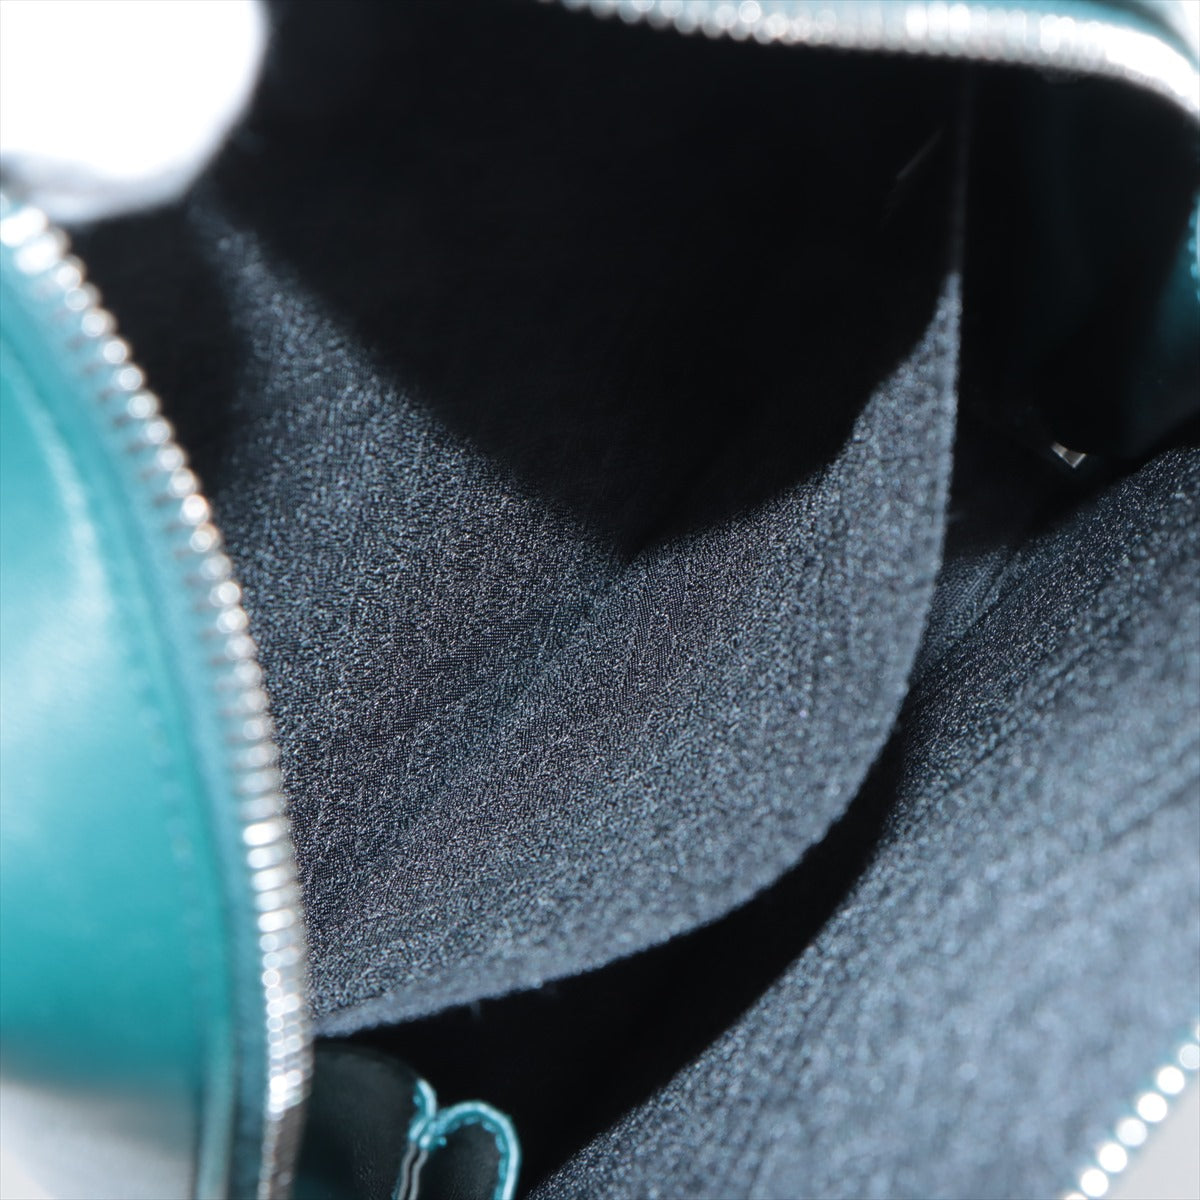 Bottega Veneta Block Leather Shoulder Bag Blue Green